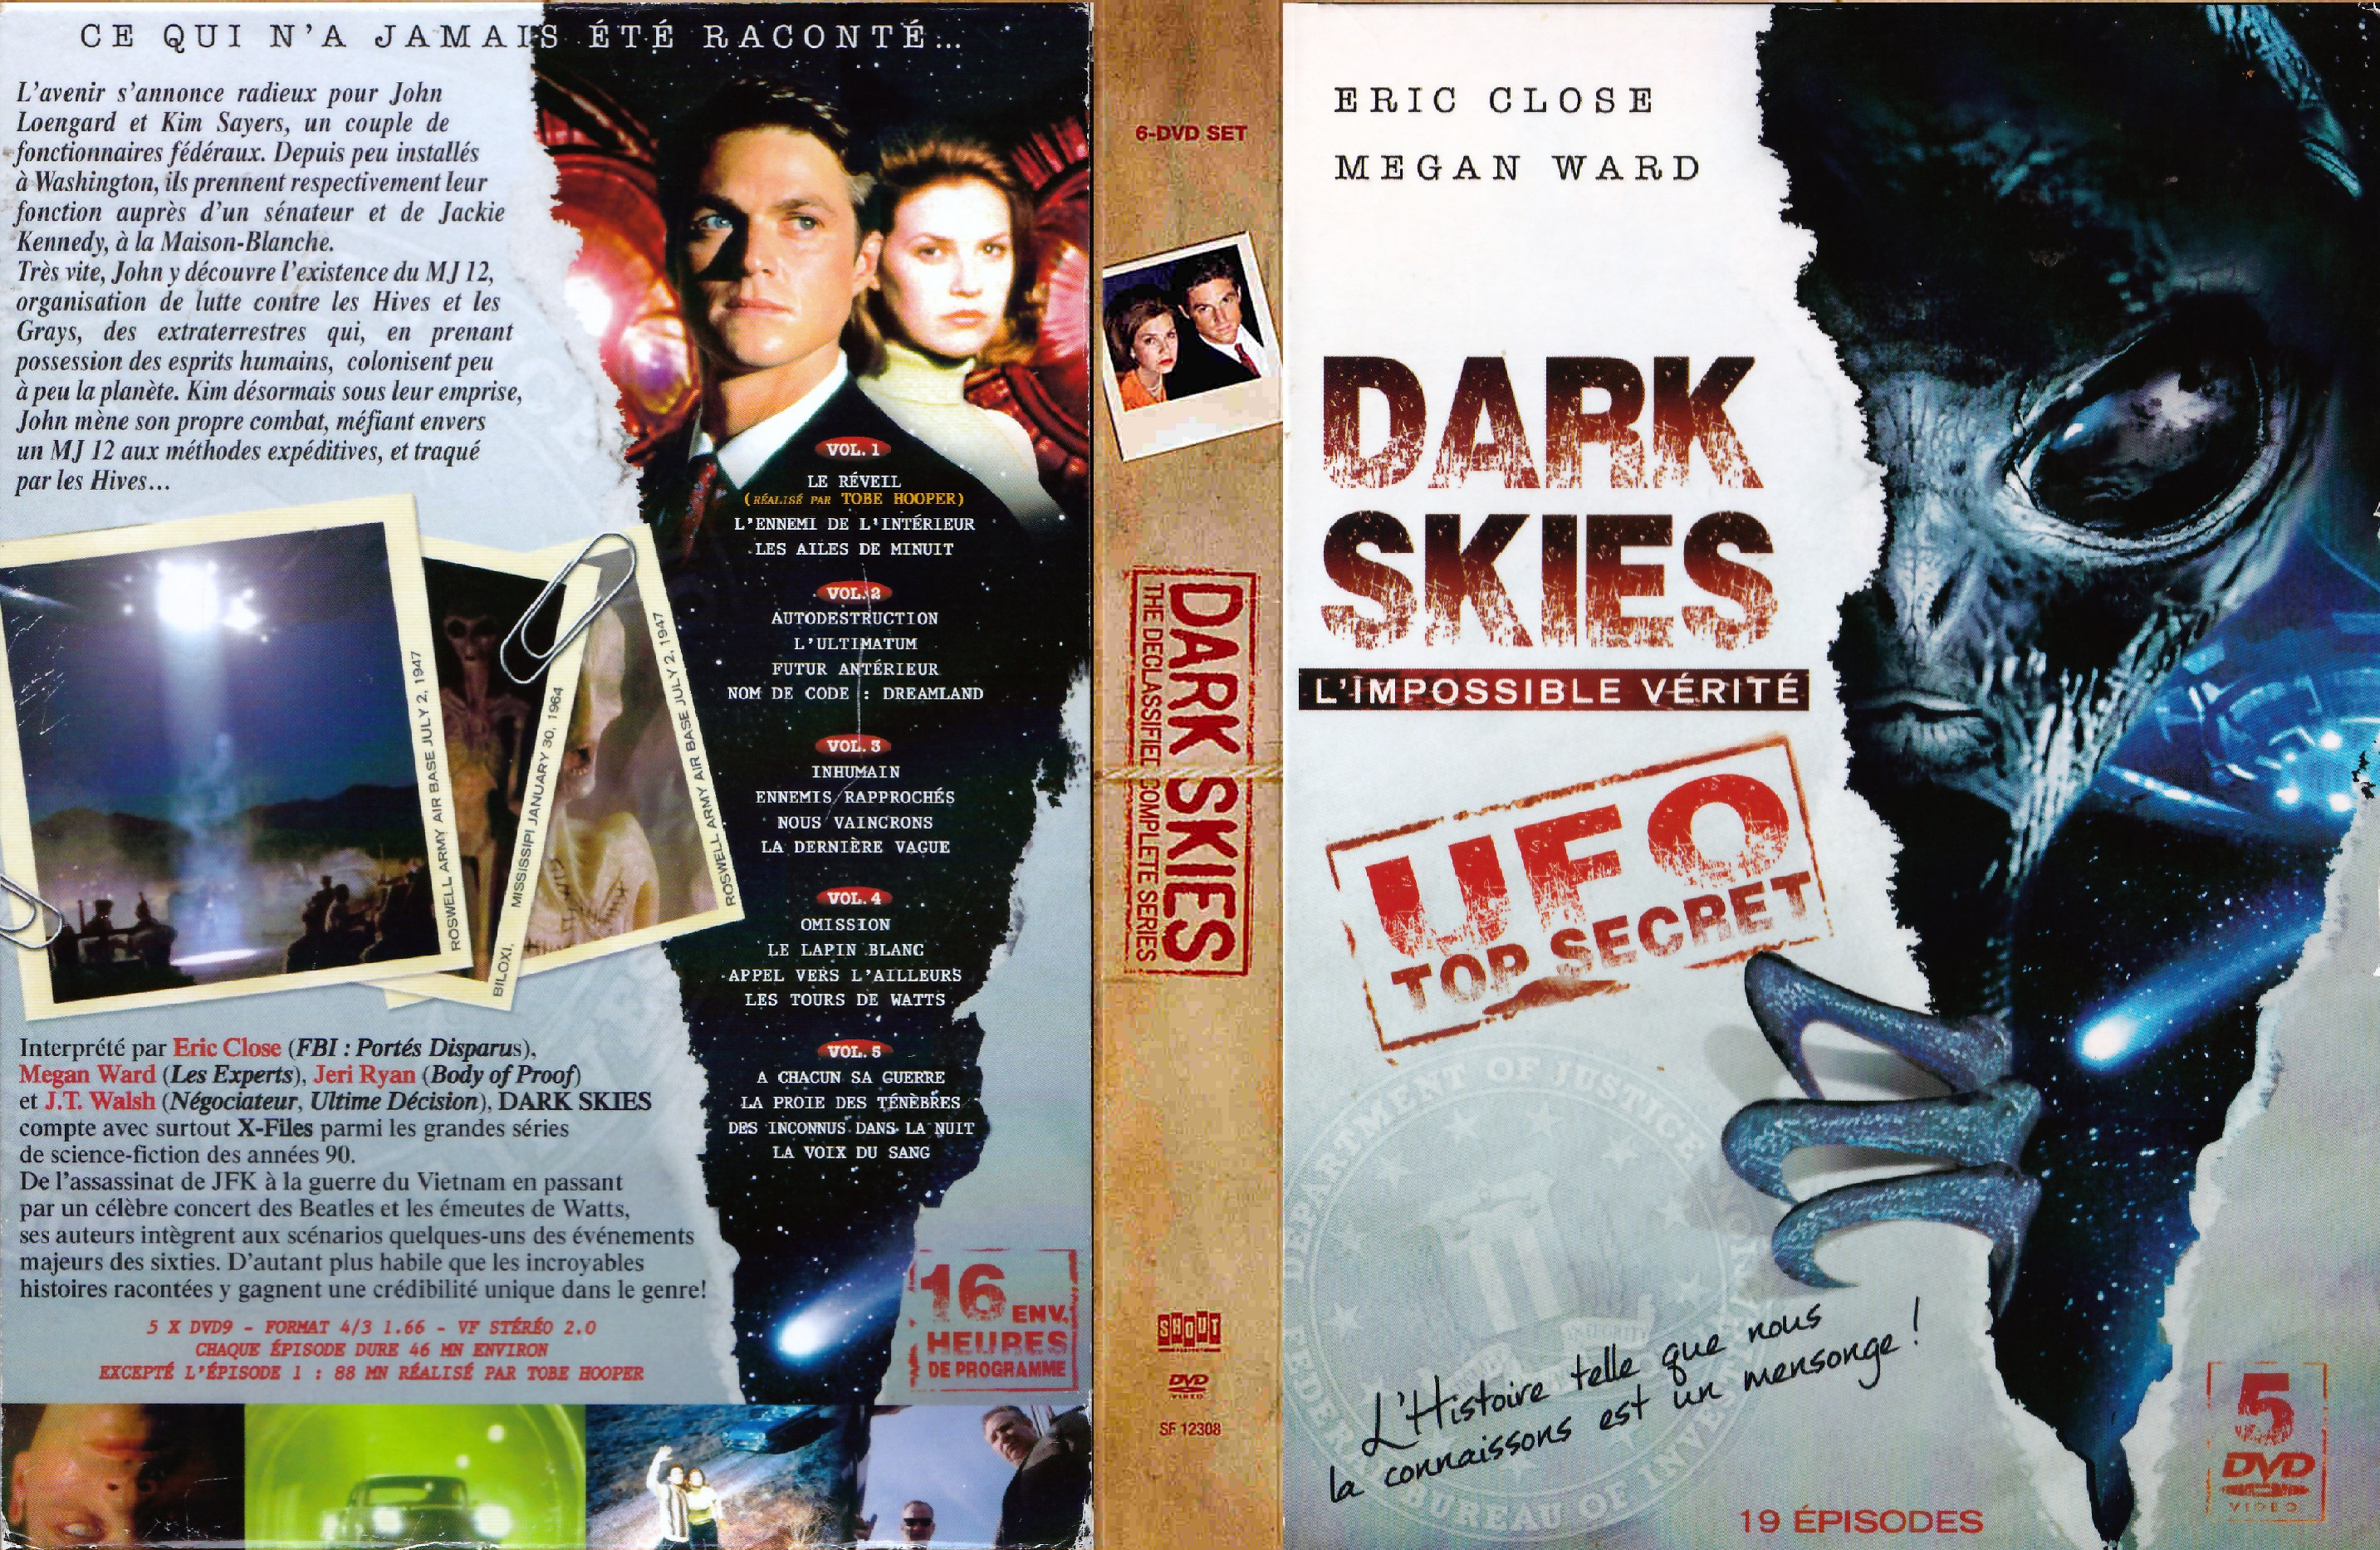 Jaquette DVD Dark Skies (Srie tv)